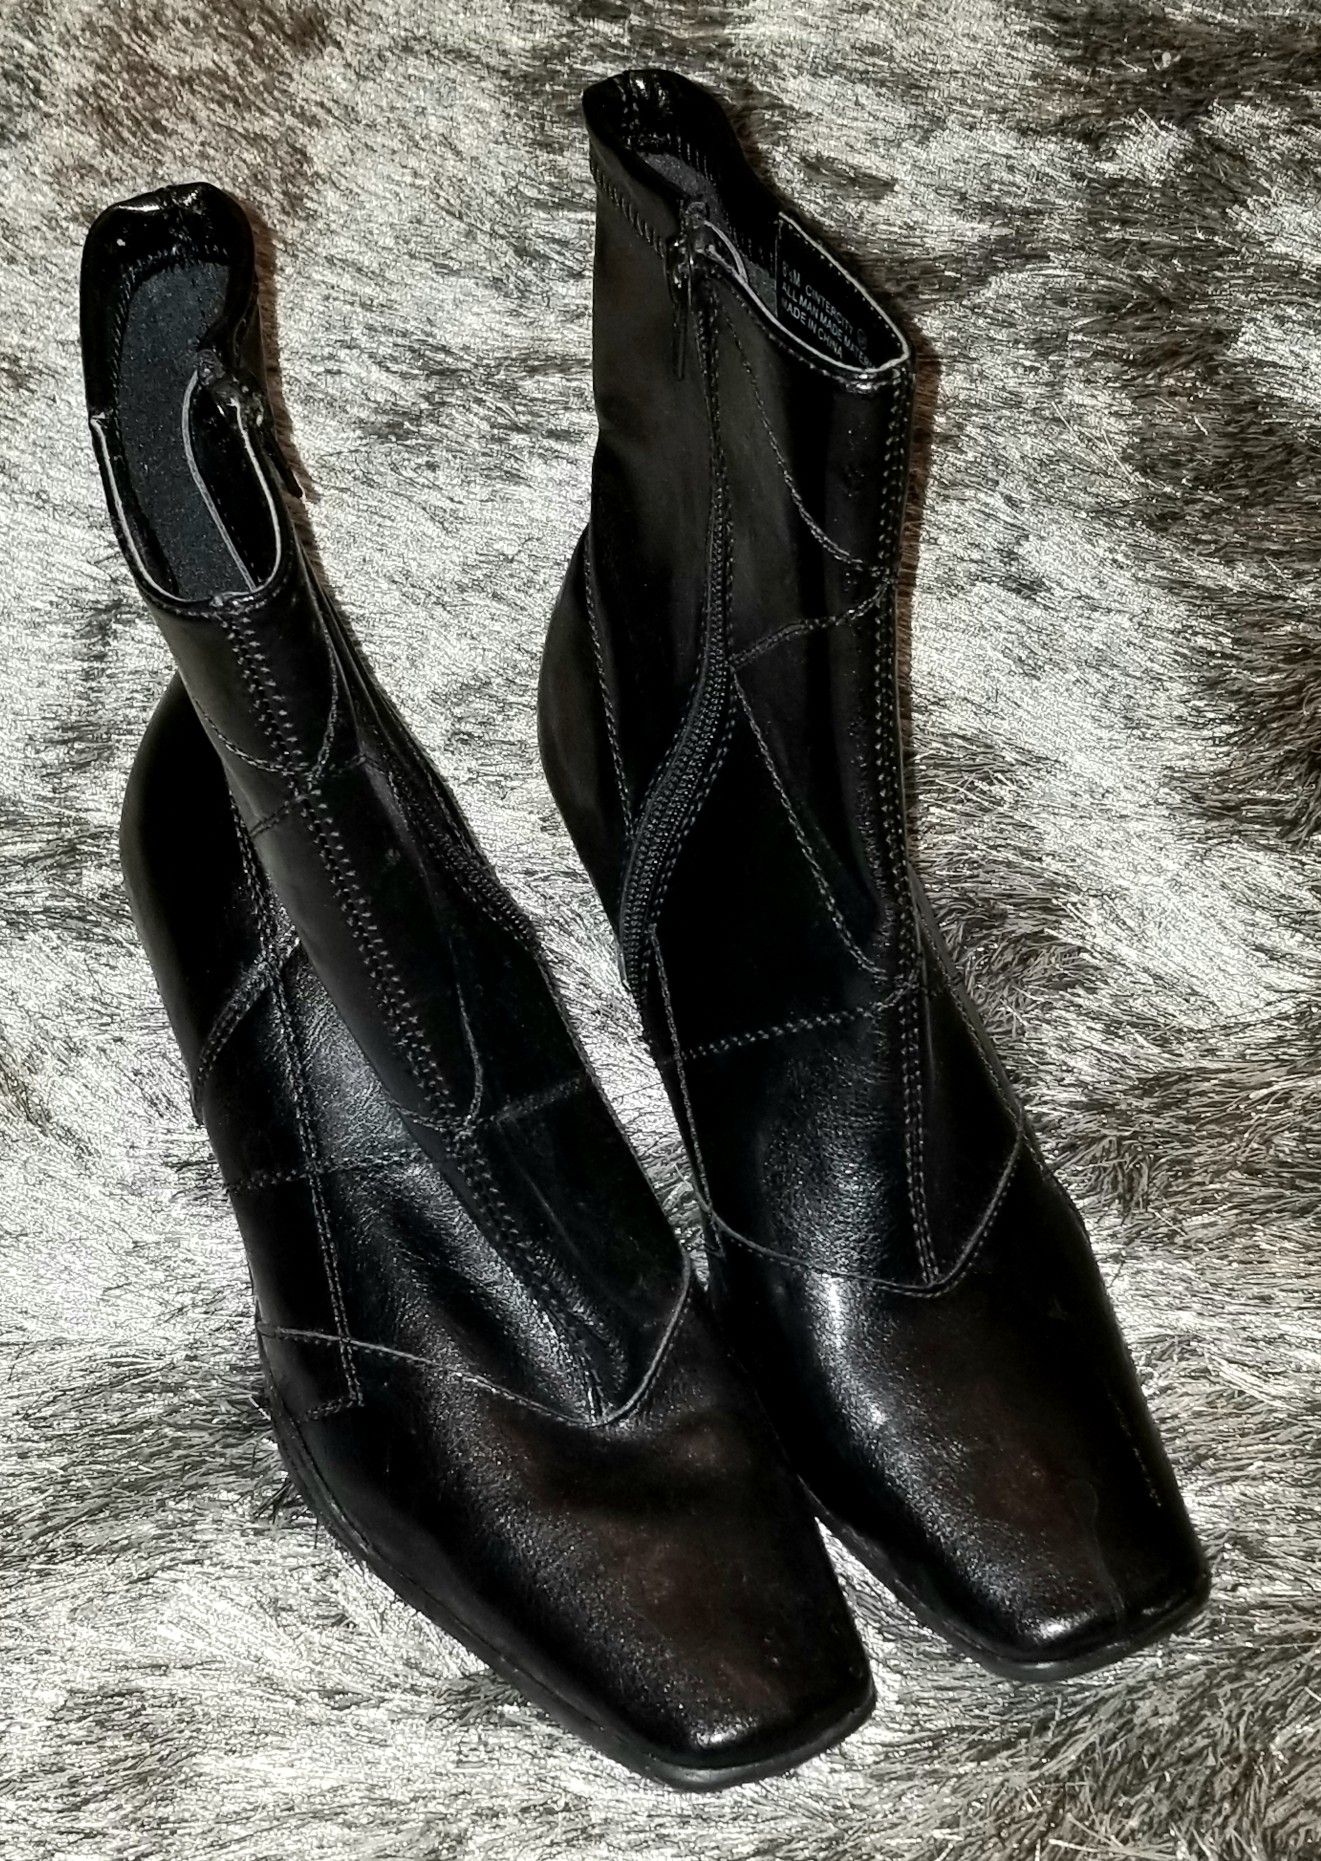 New Black Aerosoles Boots size 8.5